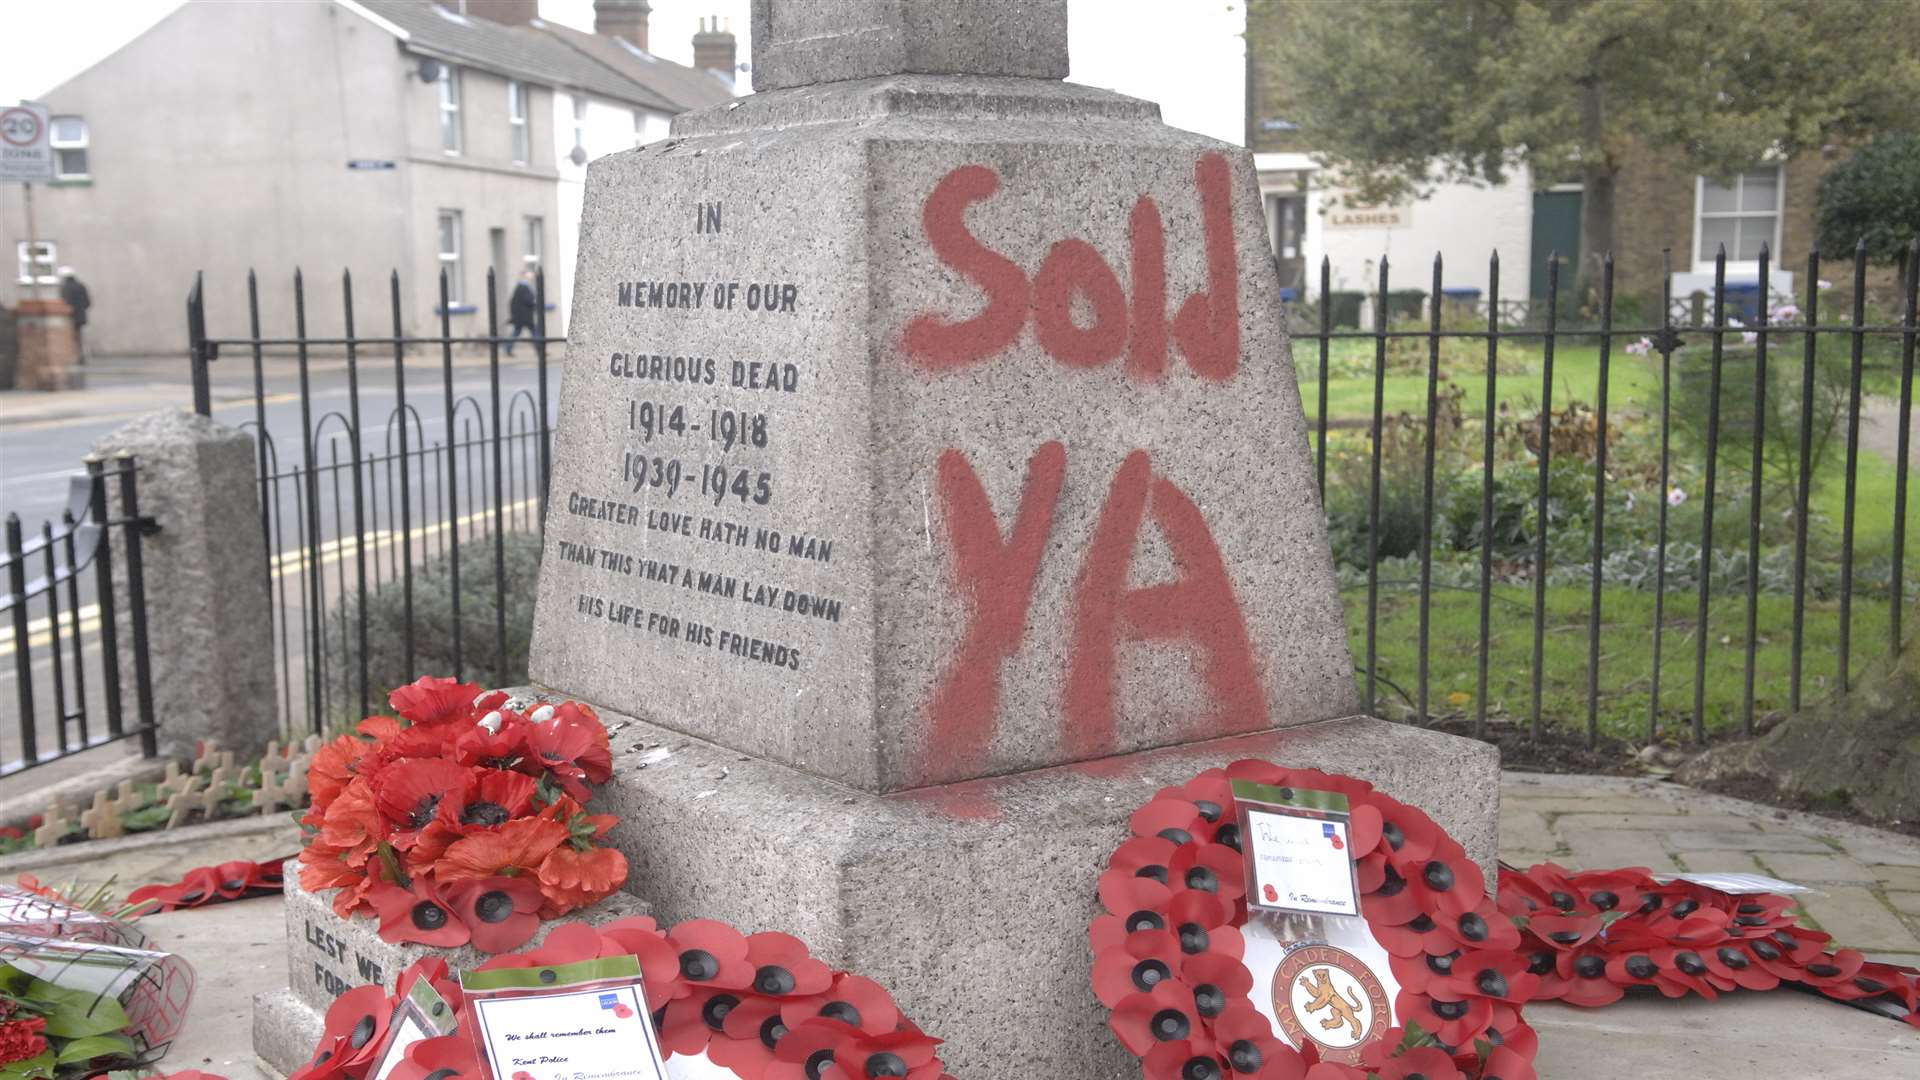 Graffiti on the Faversham War Memorial in Stone Street